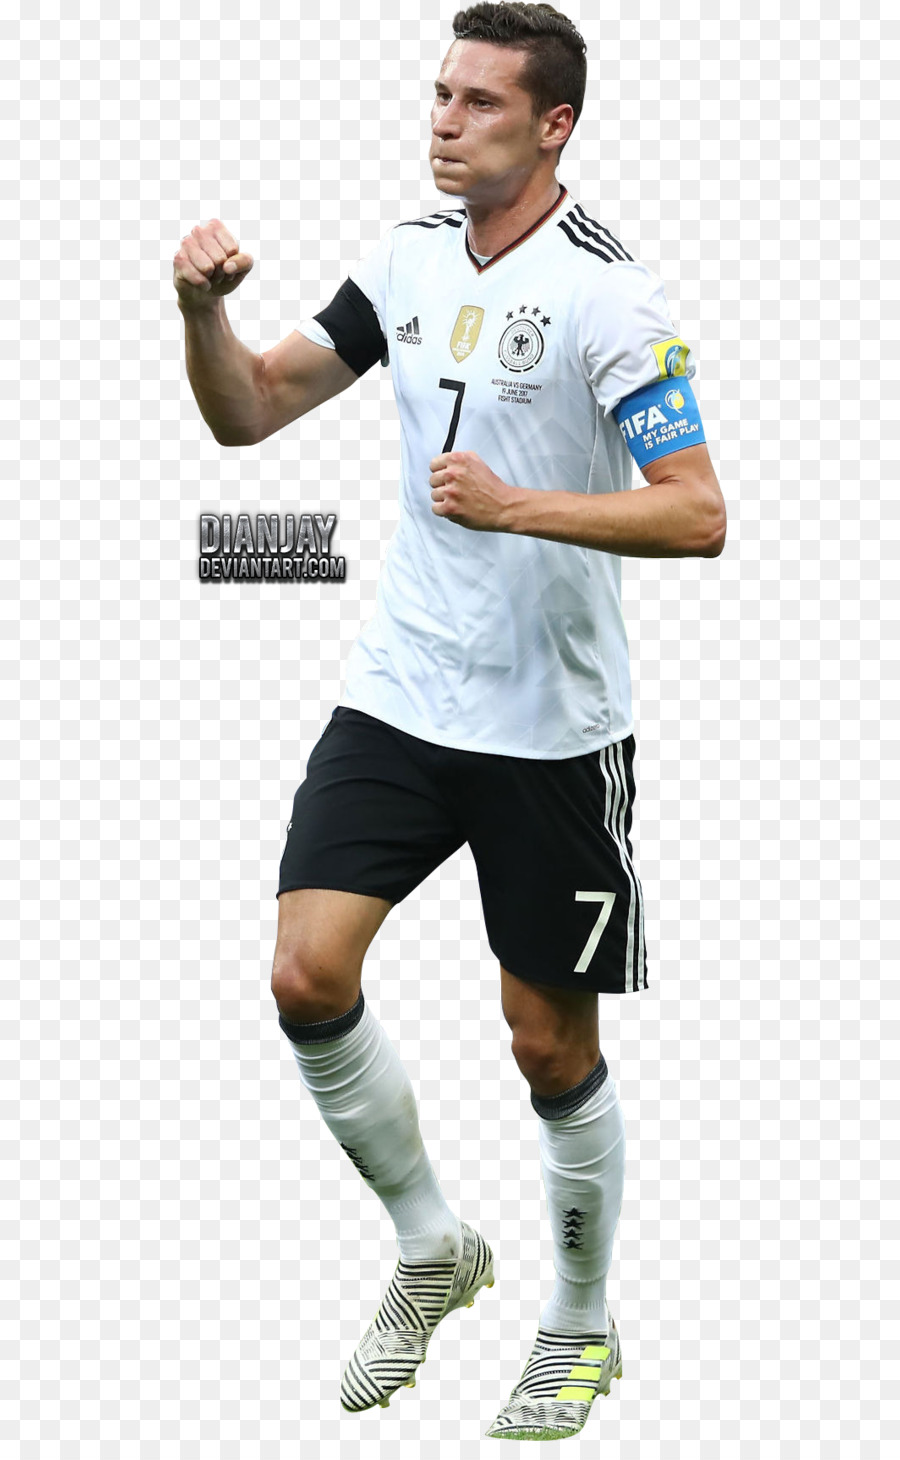 Julian Draxler Deutschland nationale Fußball-team-Jersey-Fußball-Spieler - Julian Draxler